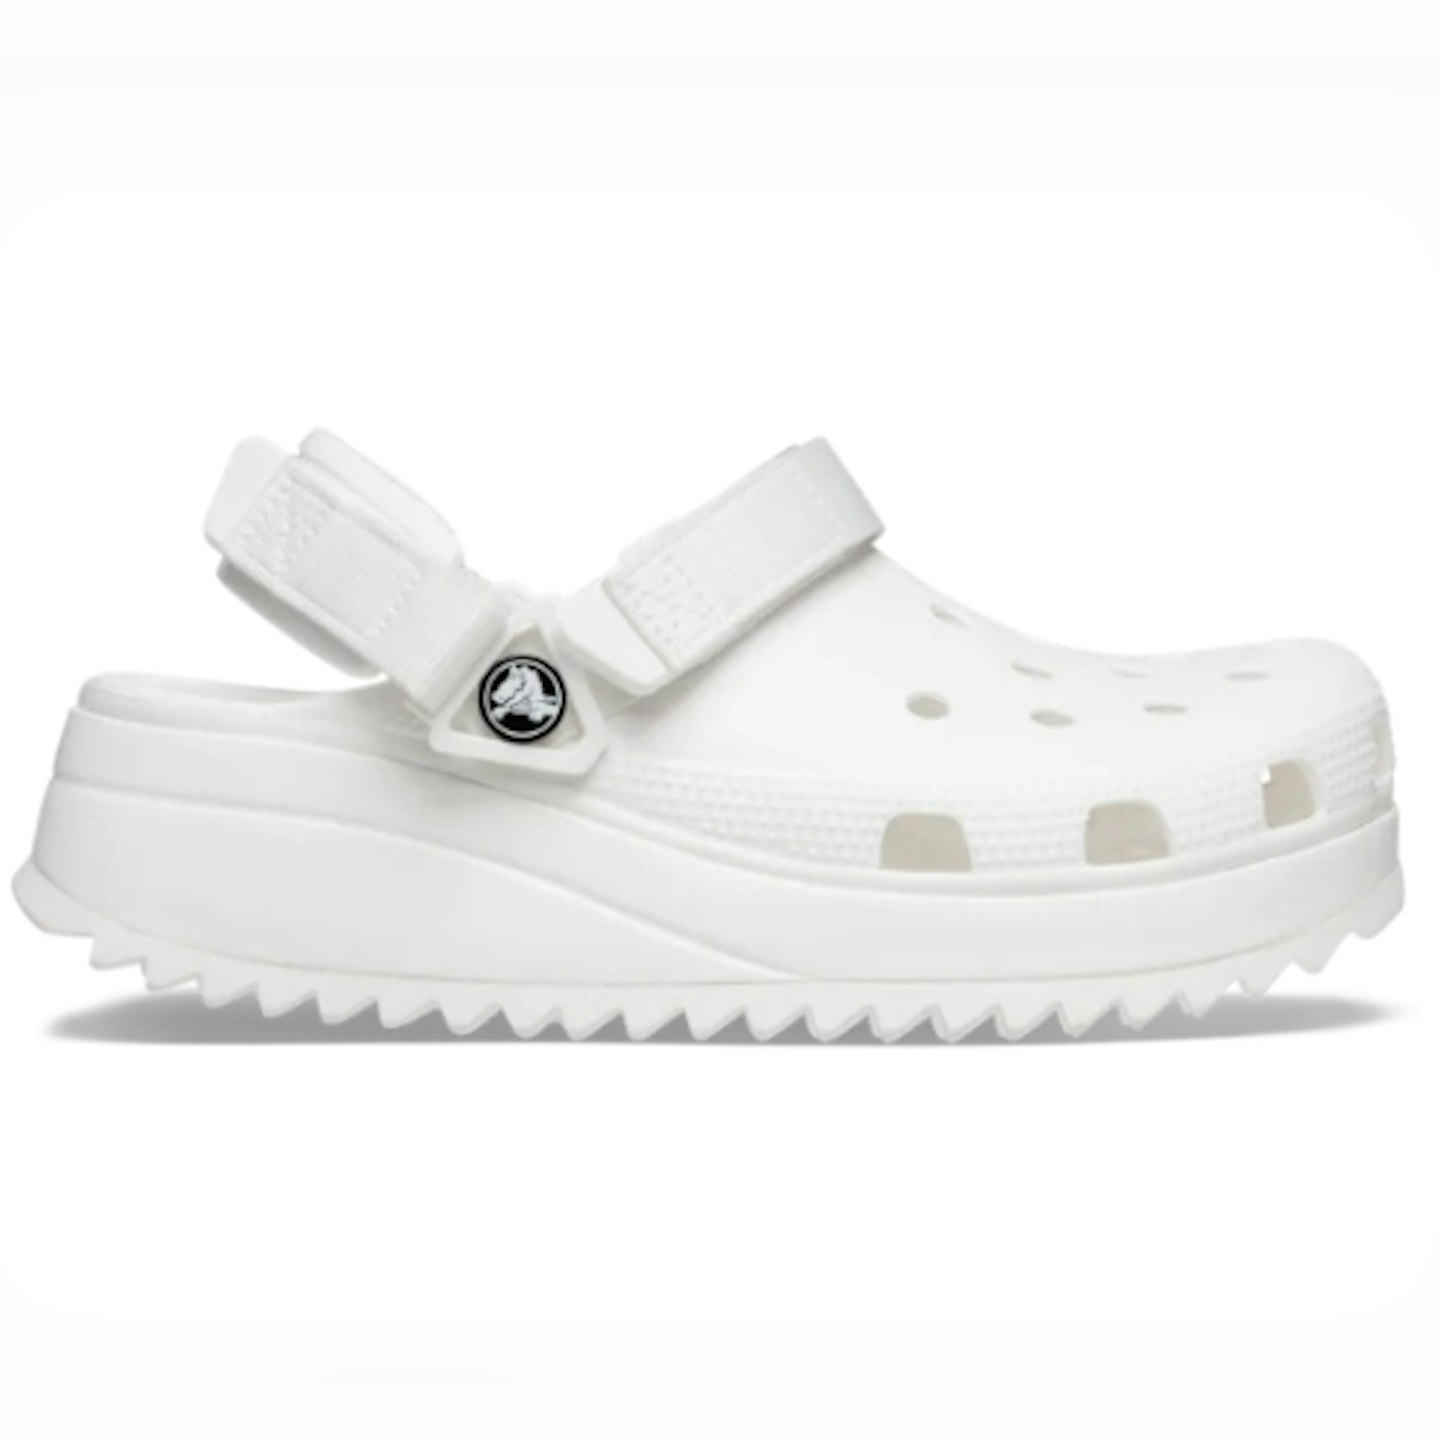 Crocs Hiker Clog in White